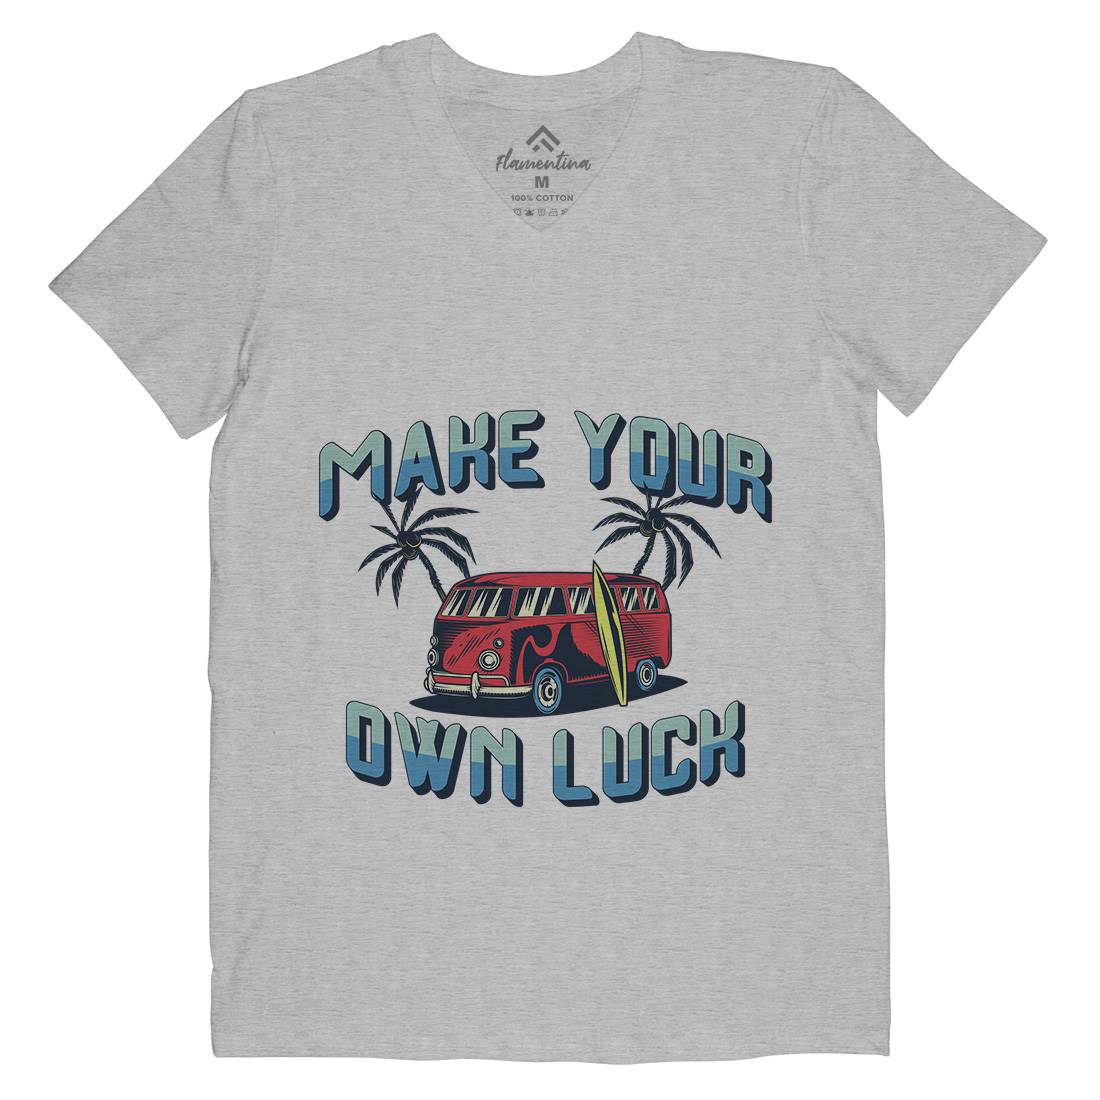 Make Your Own Luck Mens V-Neck T-Shirt Nature B307